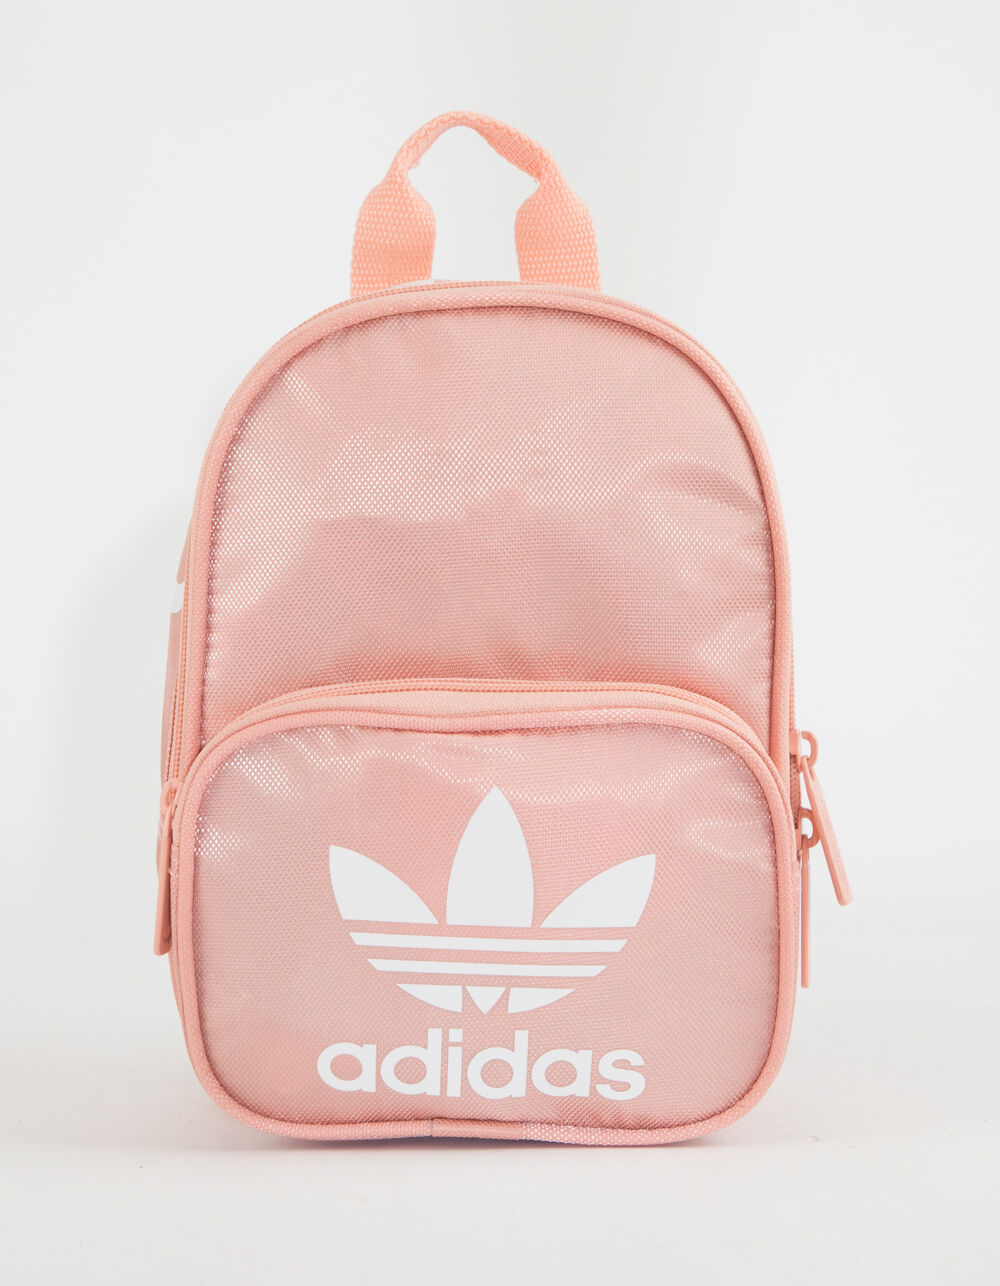 ADIDAS Originals Backpack PINK | Tillys